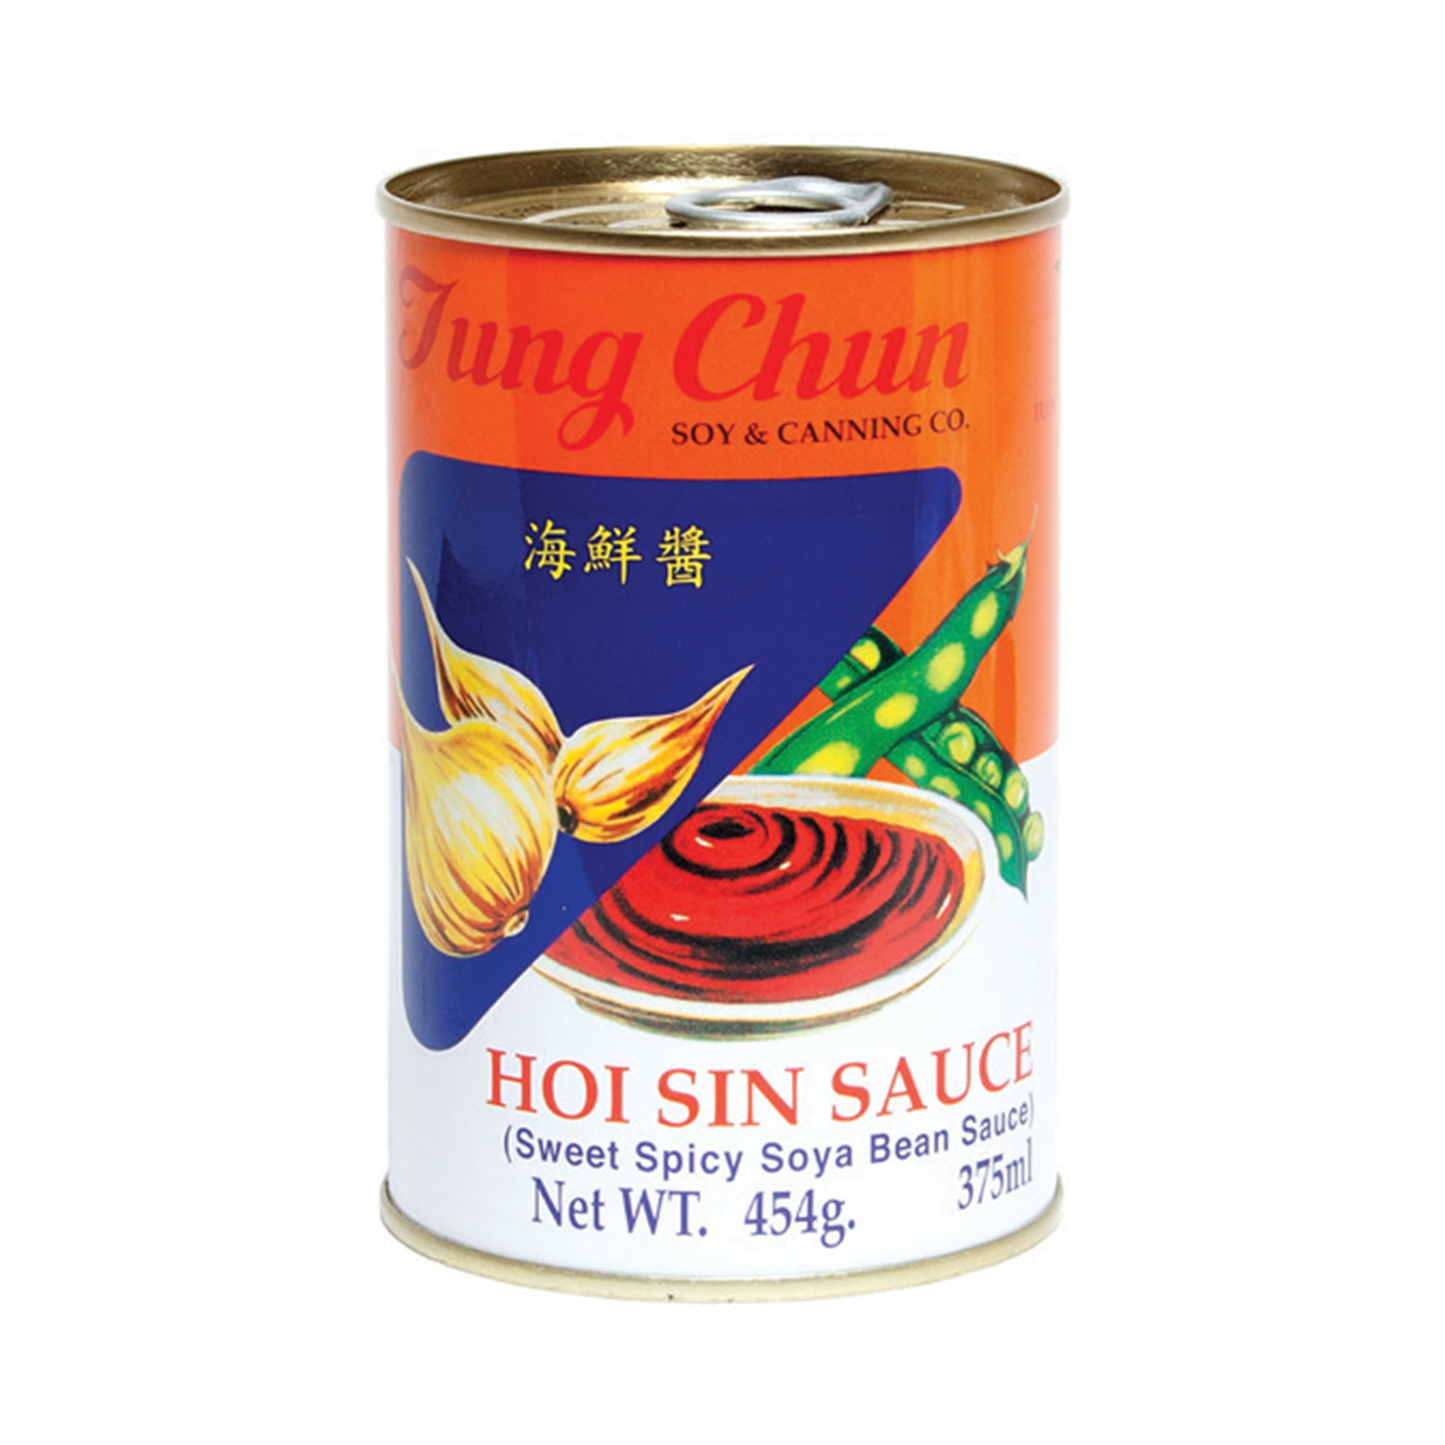 TUNG CHUN HOI SIN SAUCE 同珍海鲜酱